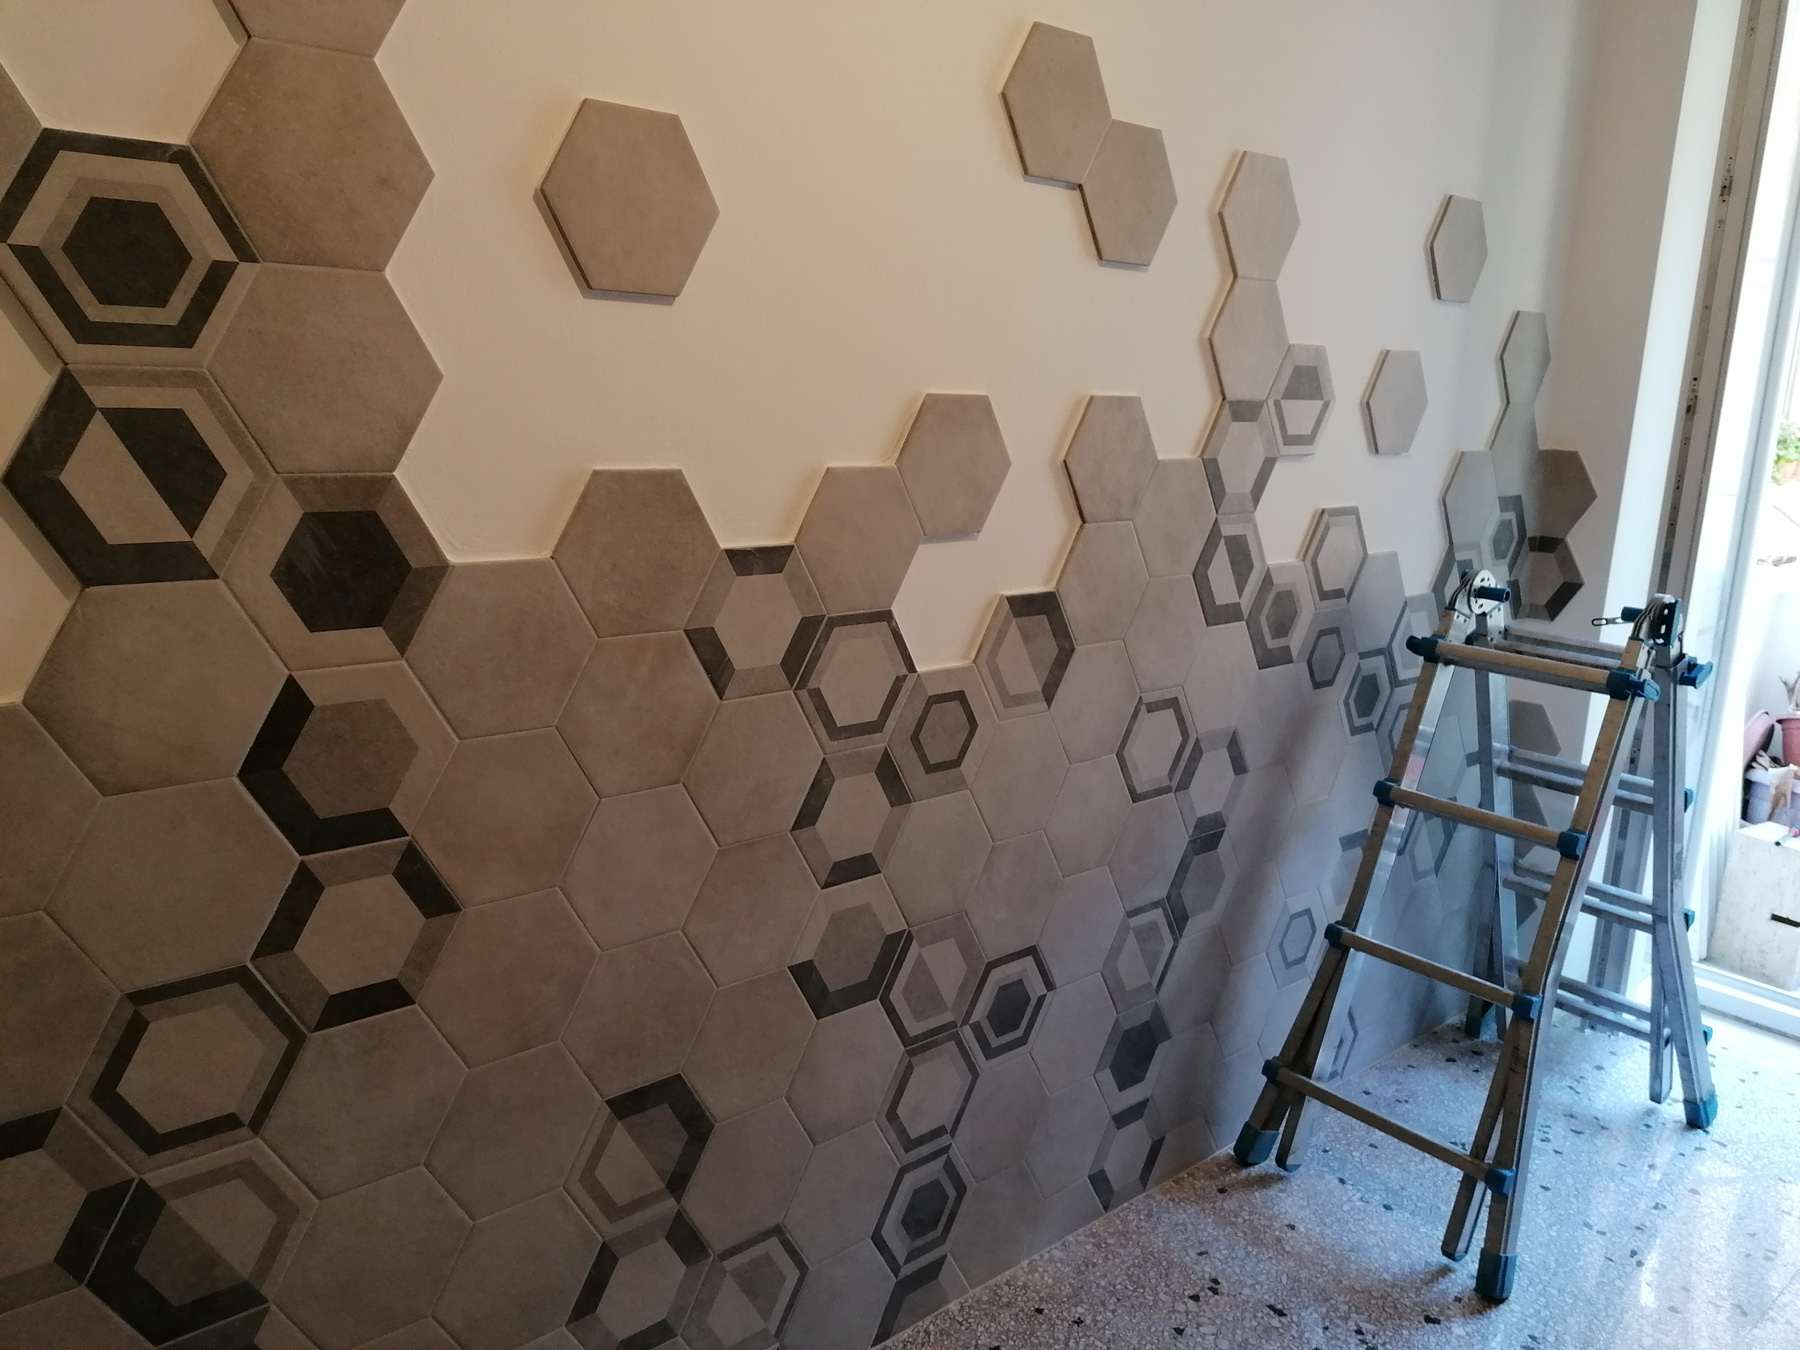 A case of laying hexagonal tiles